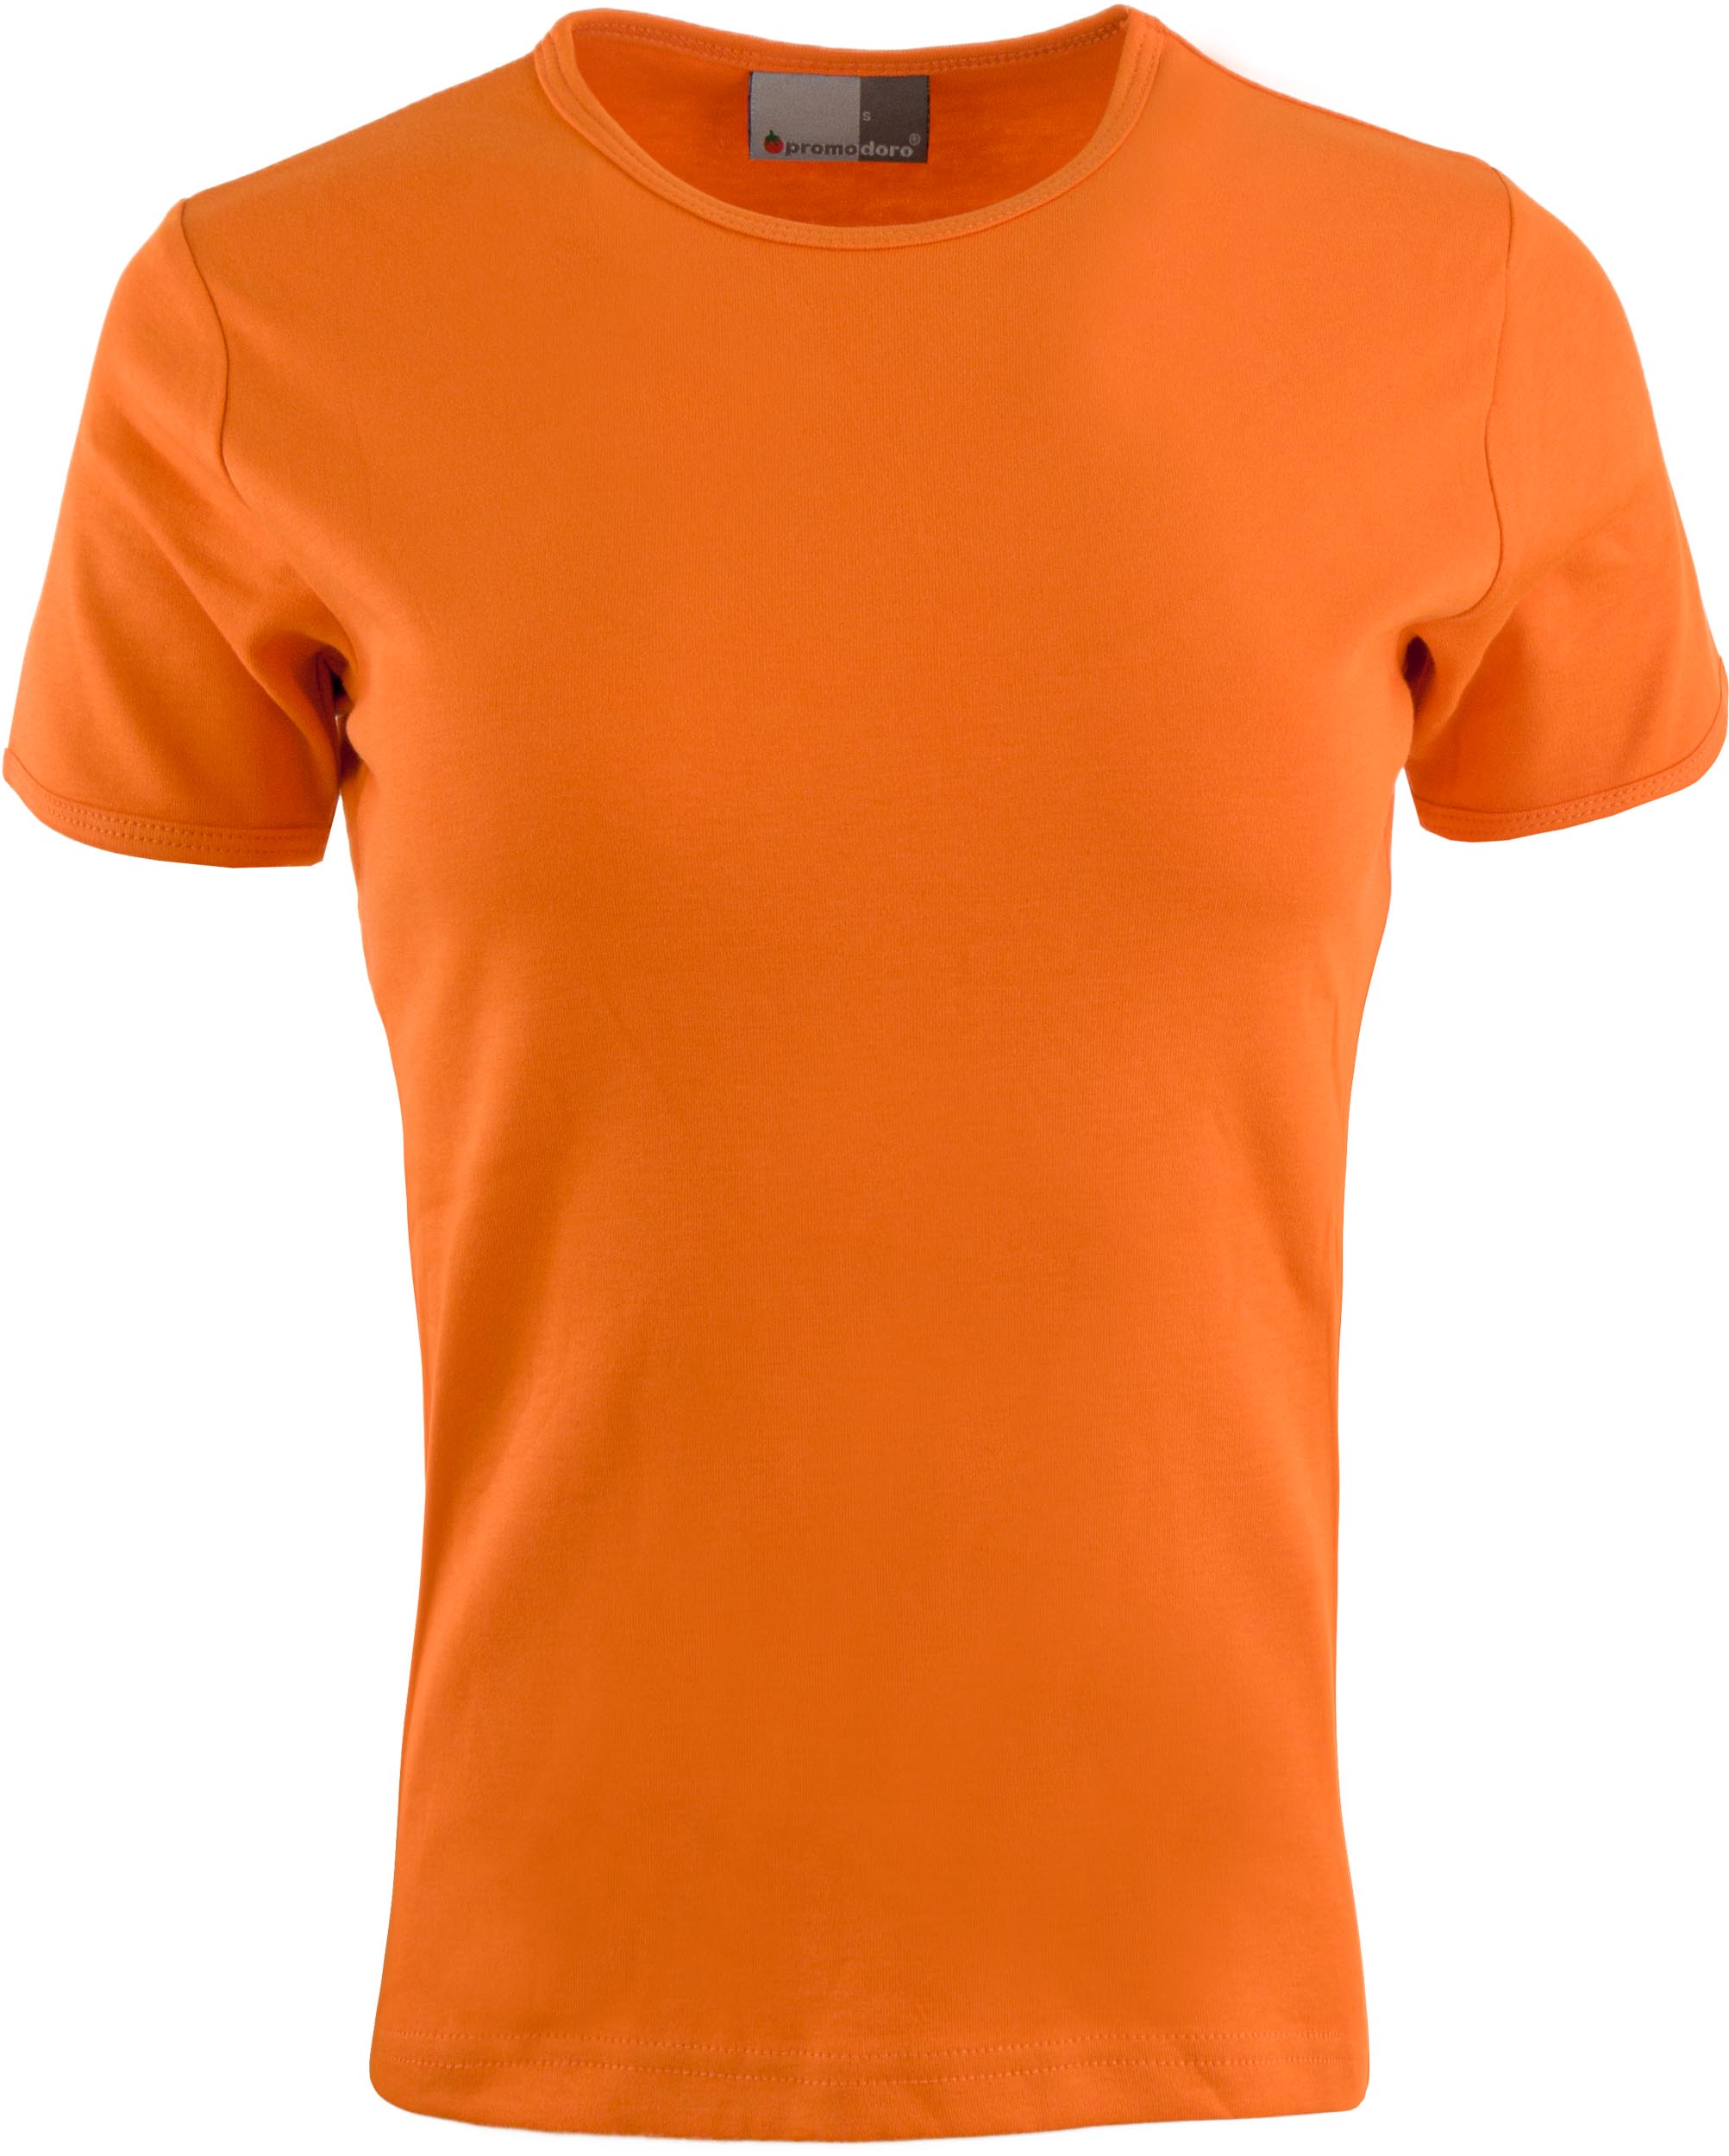 Dámské triko Promodoro Interlock Orange|XL